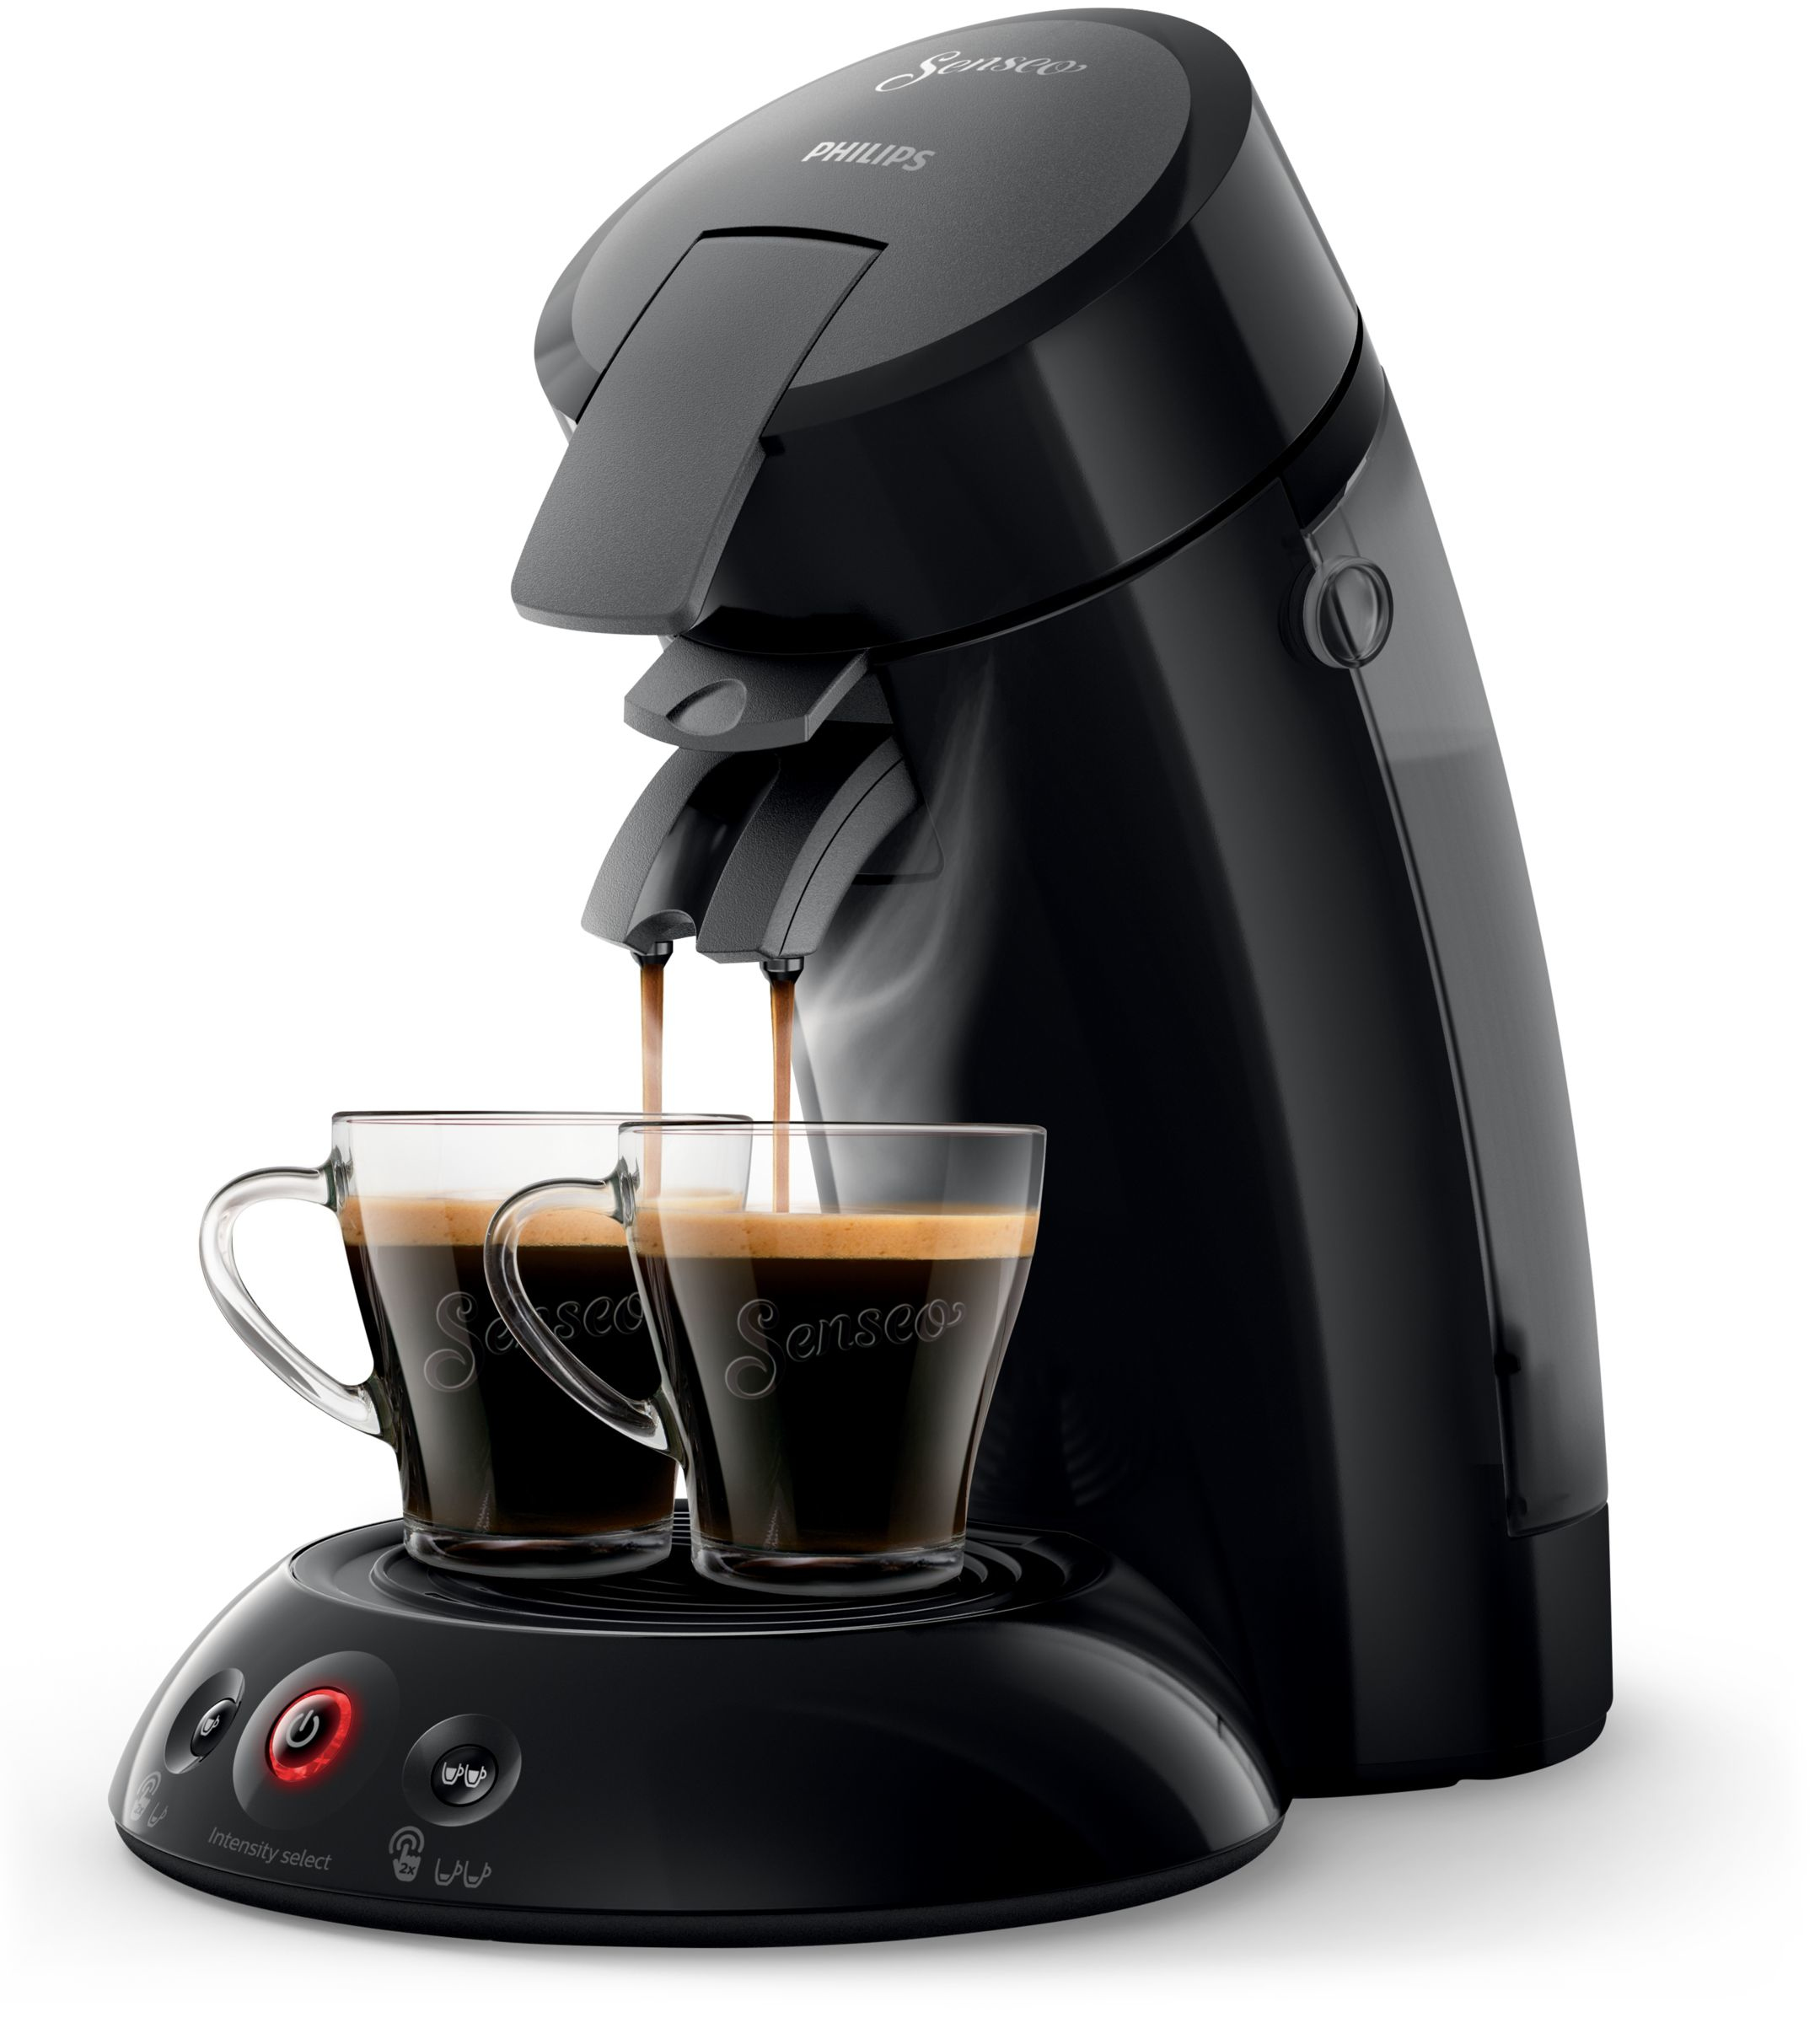 Philips HD6554/68R1 coffee maker